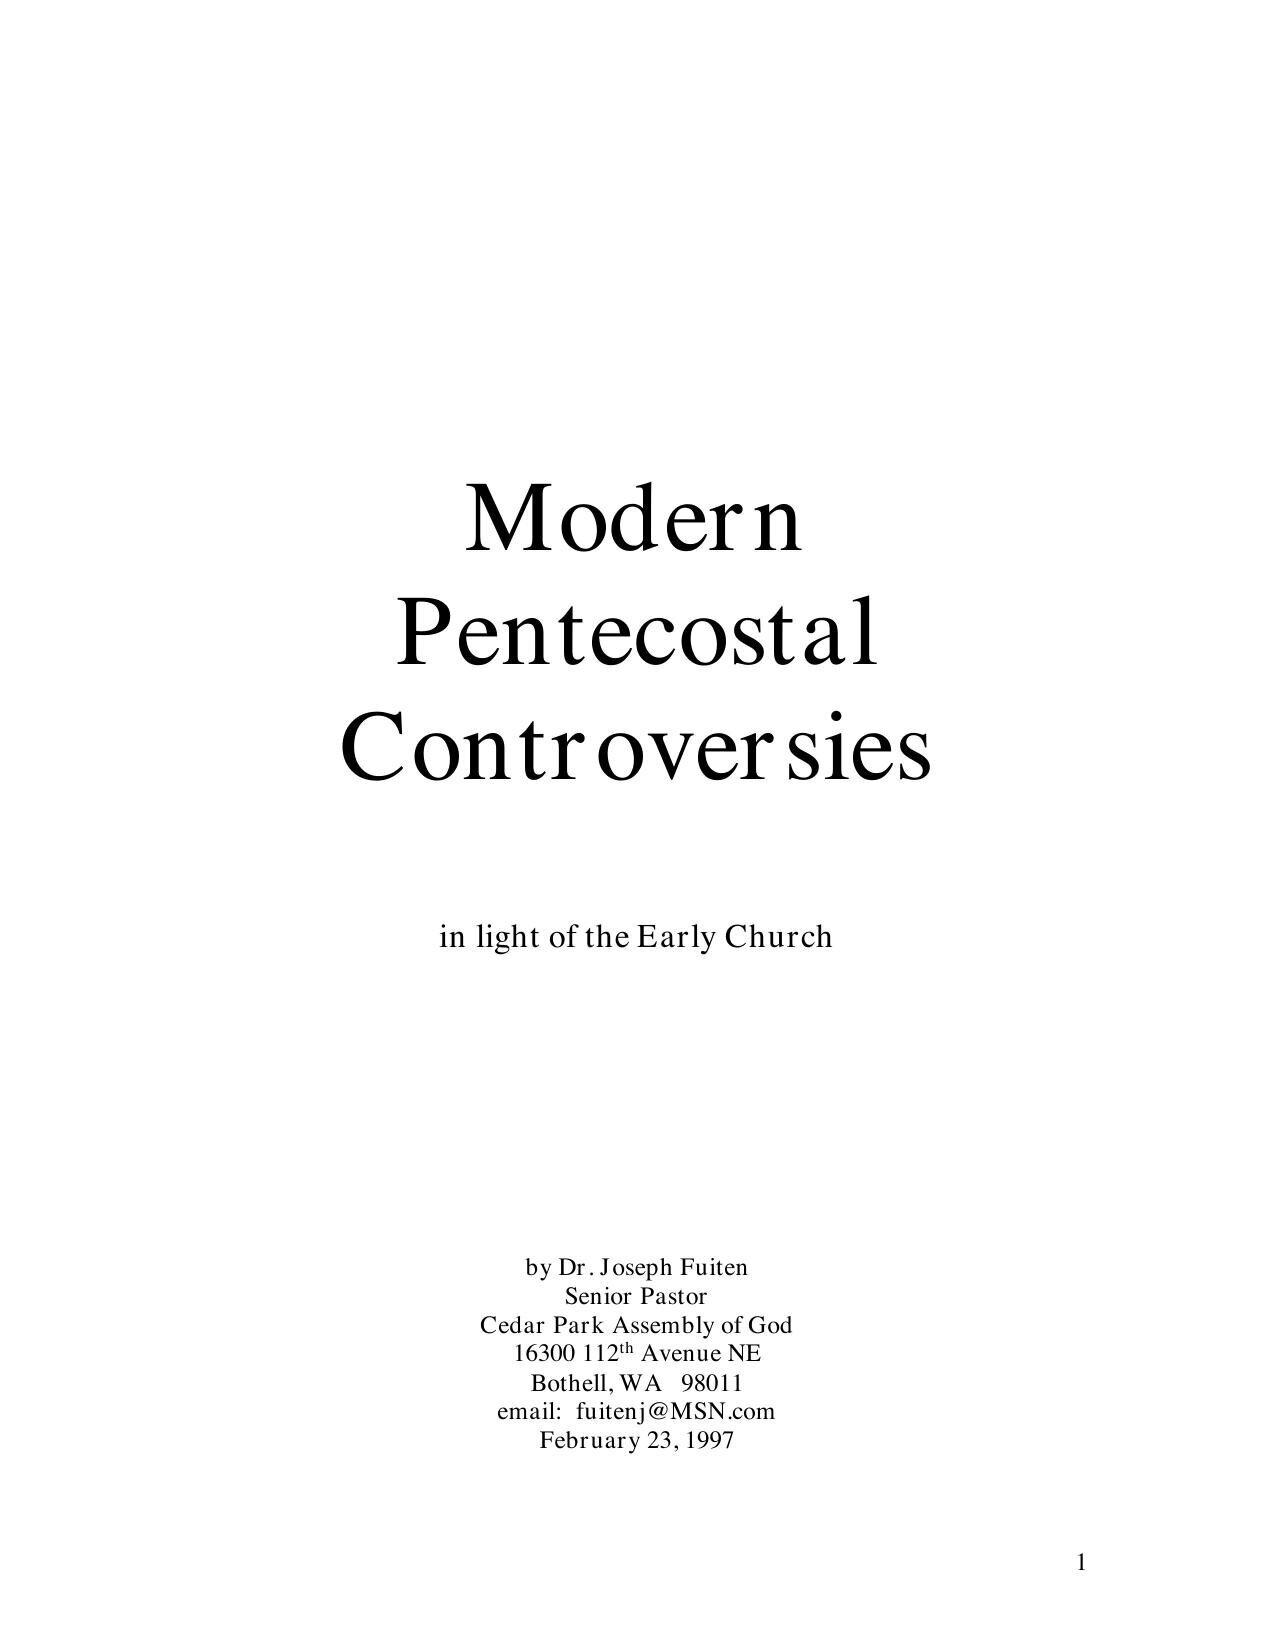 Modern Pentacostal Controversies